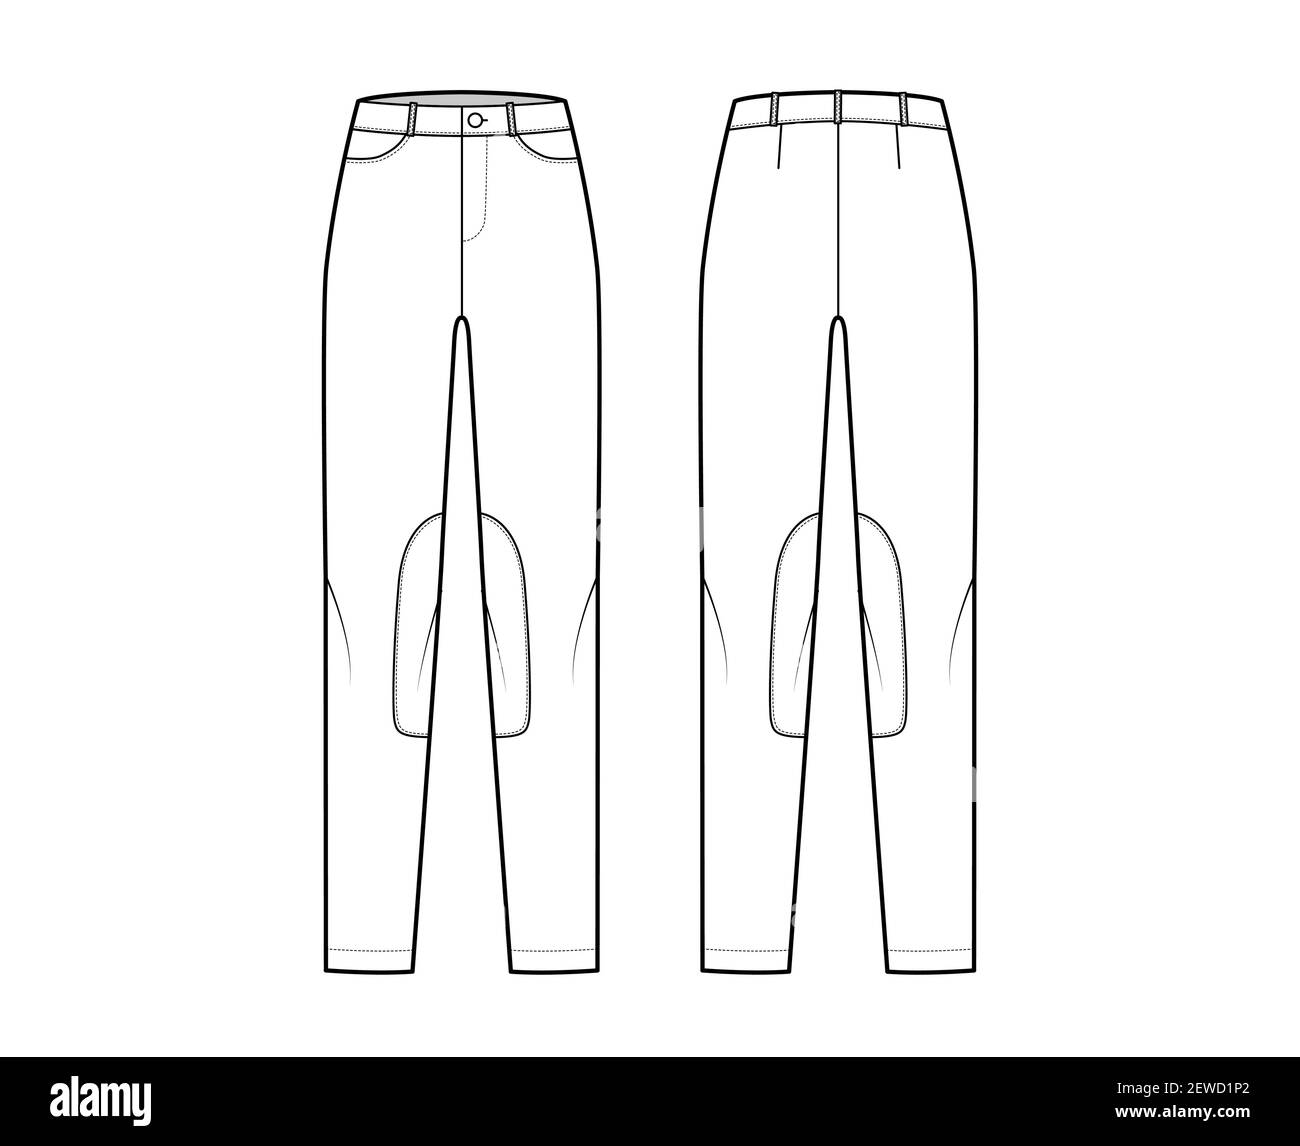 Set of Jeans Kentucky Jodhpurs Denim pants technical fashion ...